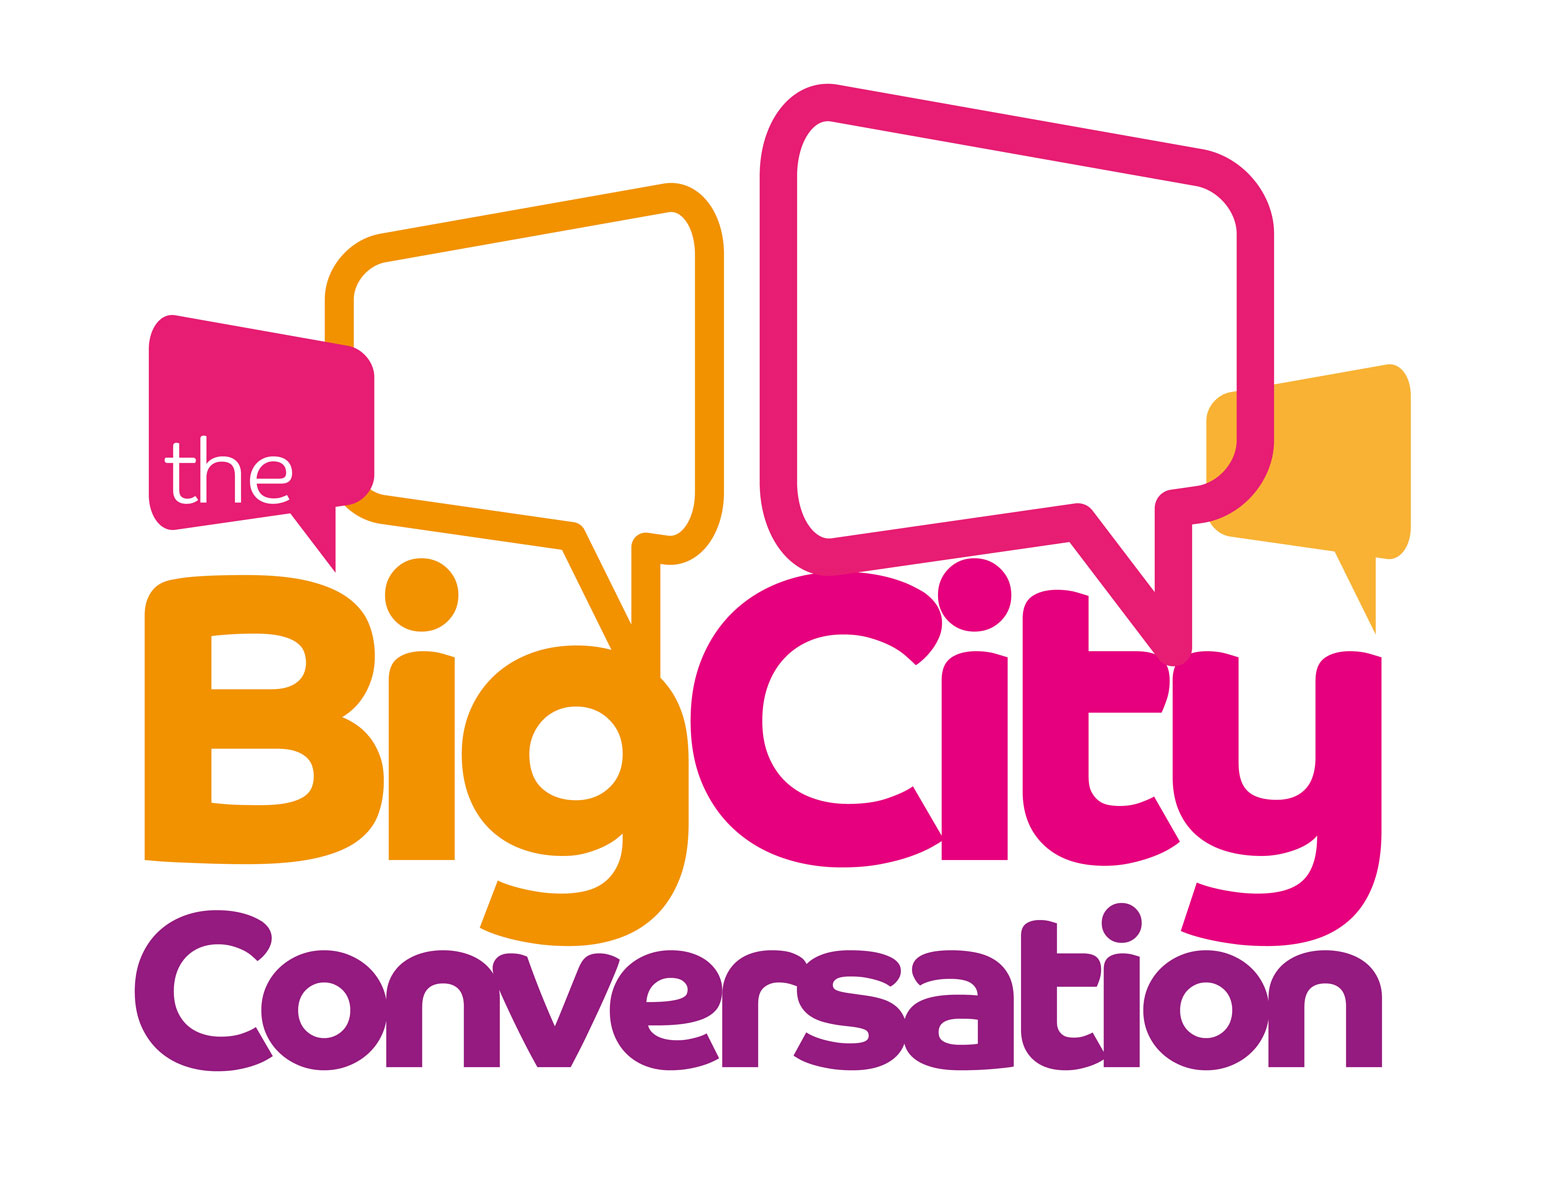 The big city conversation logo